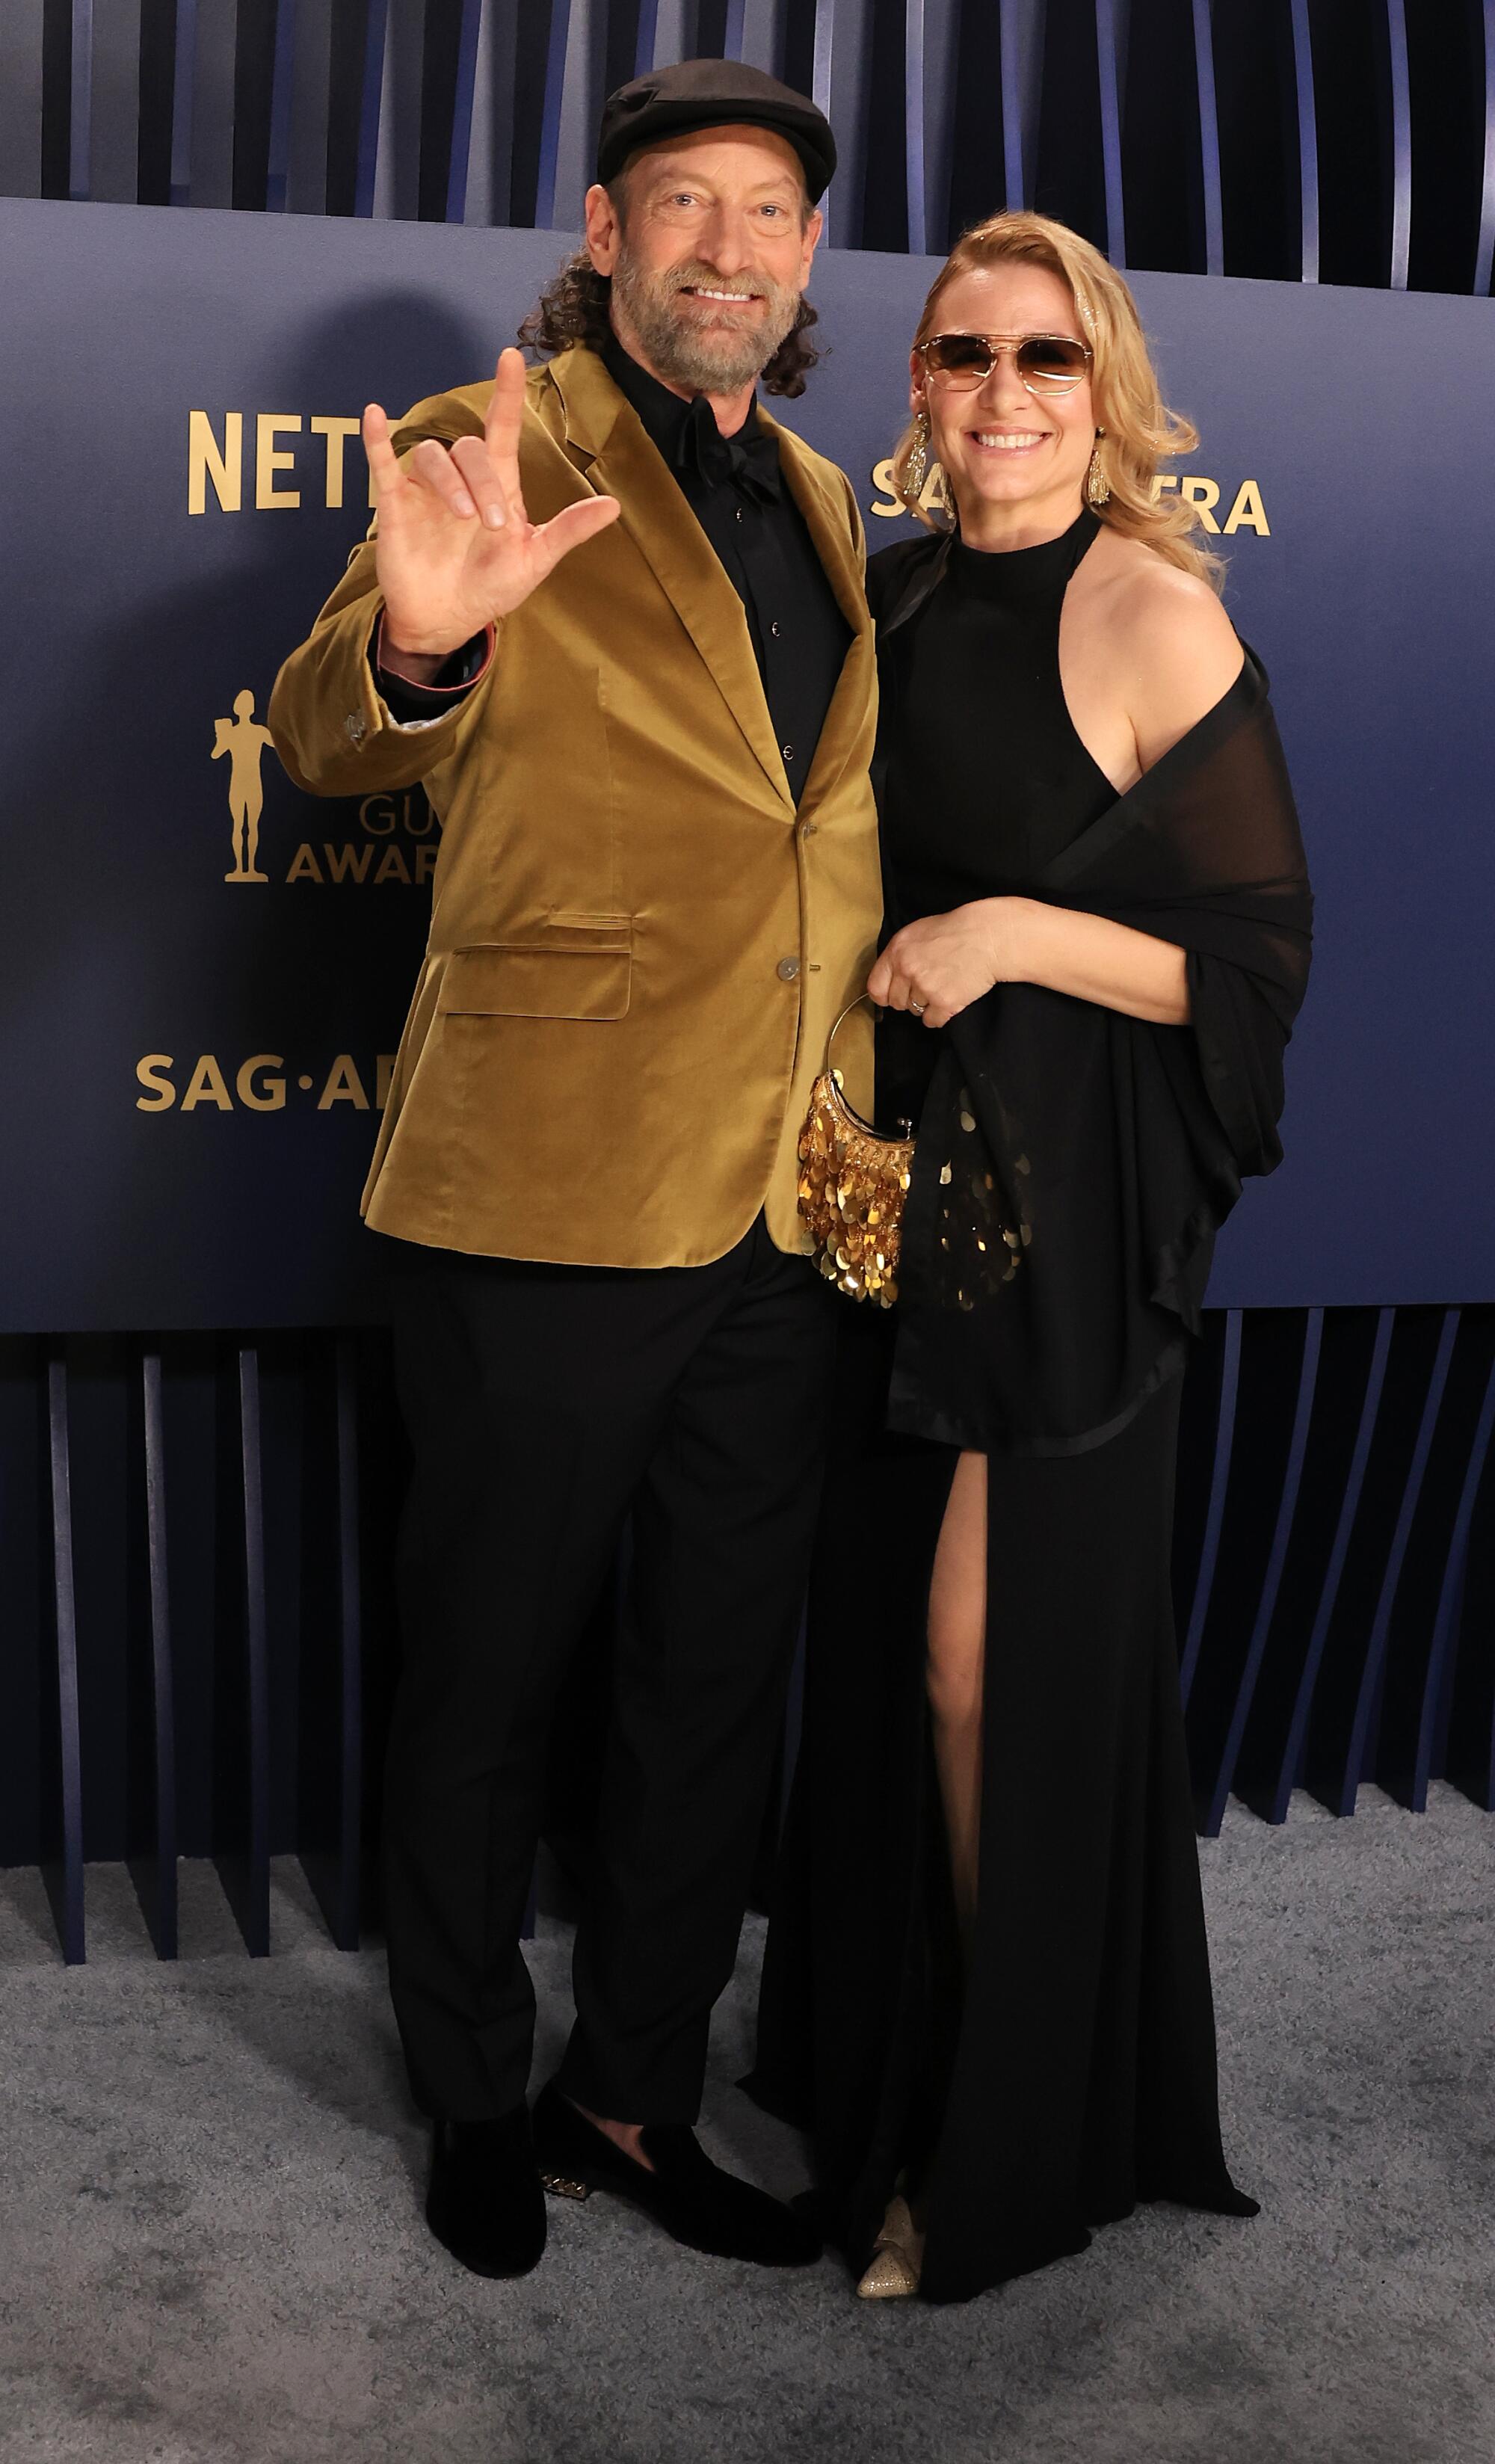 Troy Kotsur wears a gold velvet suit jacket and Deanne Bray wears a black dress at the SAG Awards.